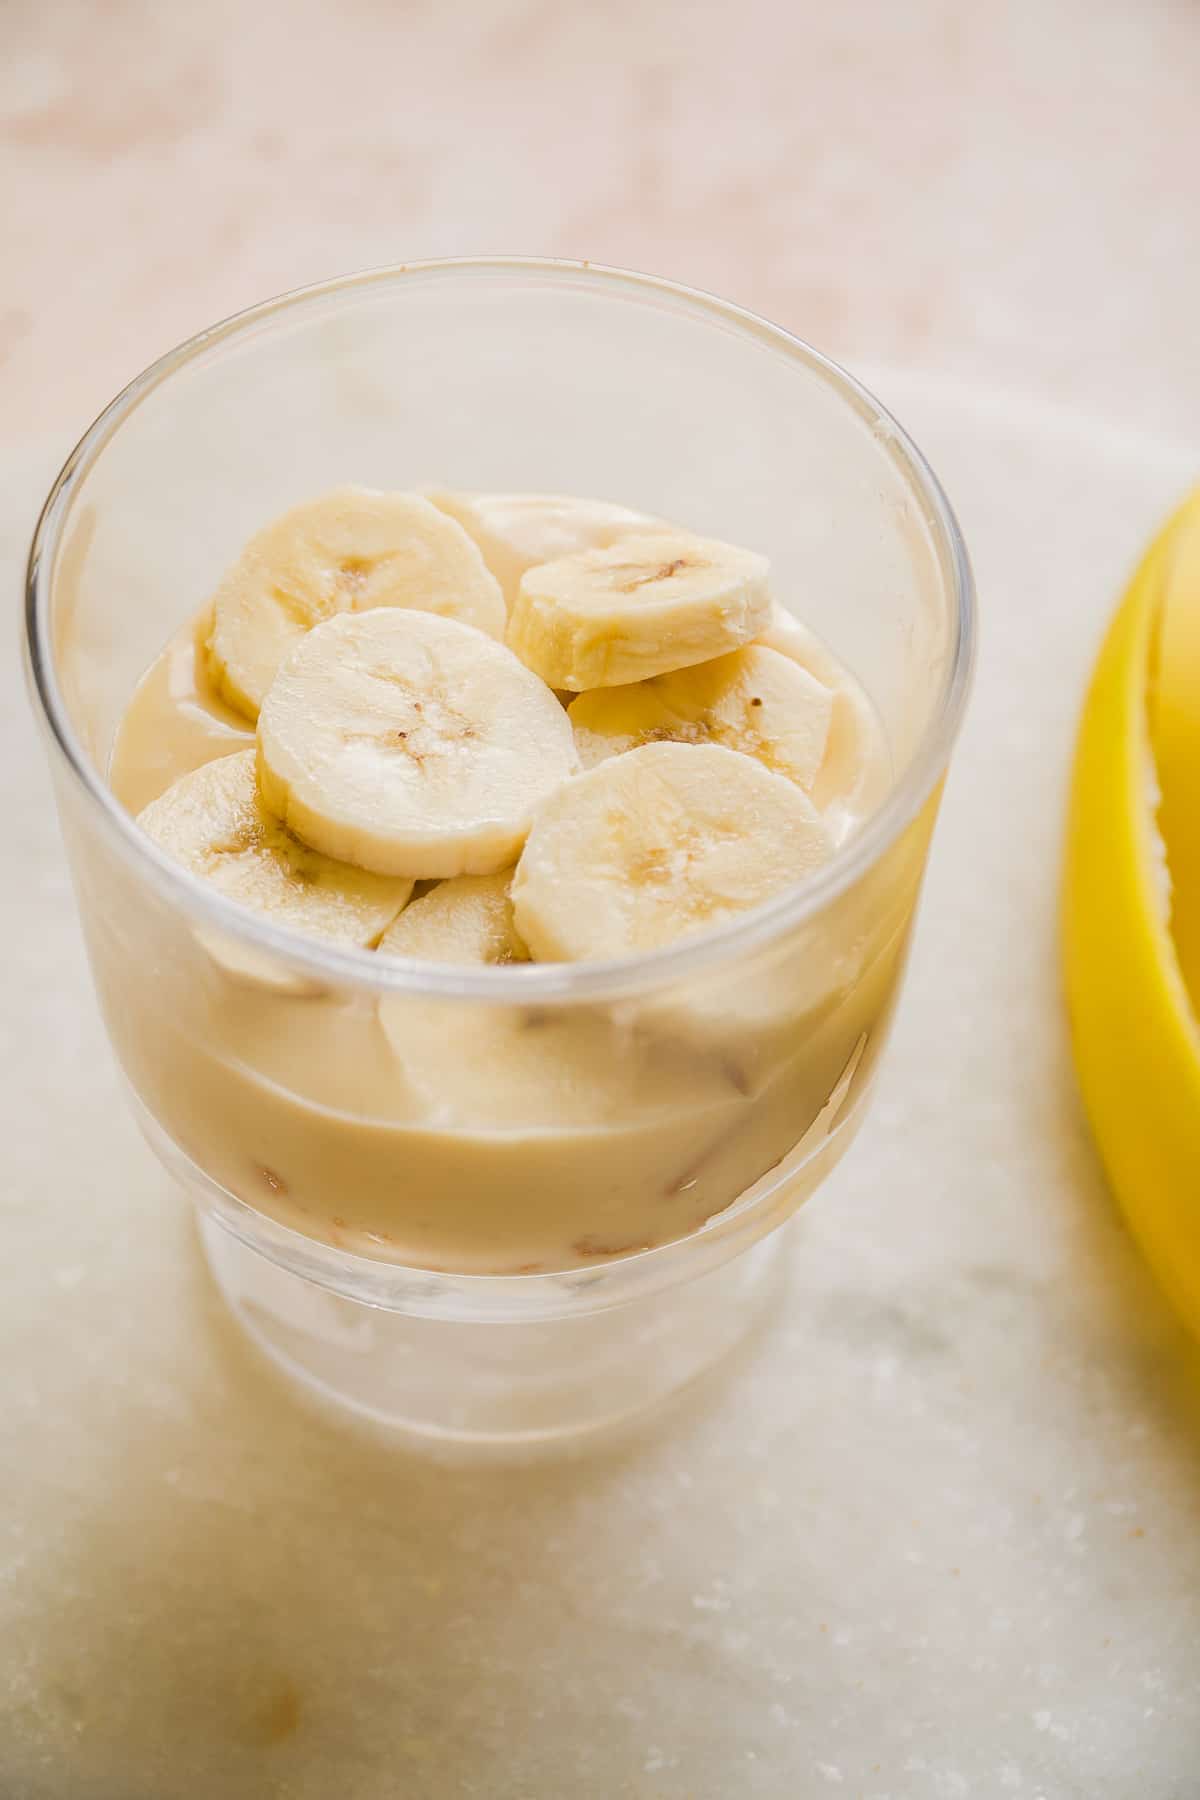 Small glass with banana pudding and a layer of sliced bananas.